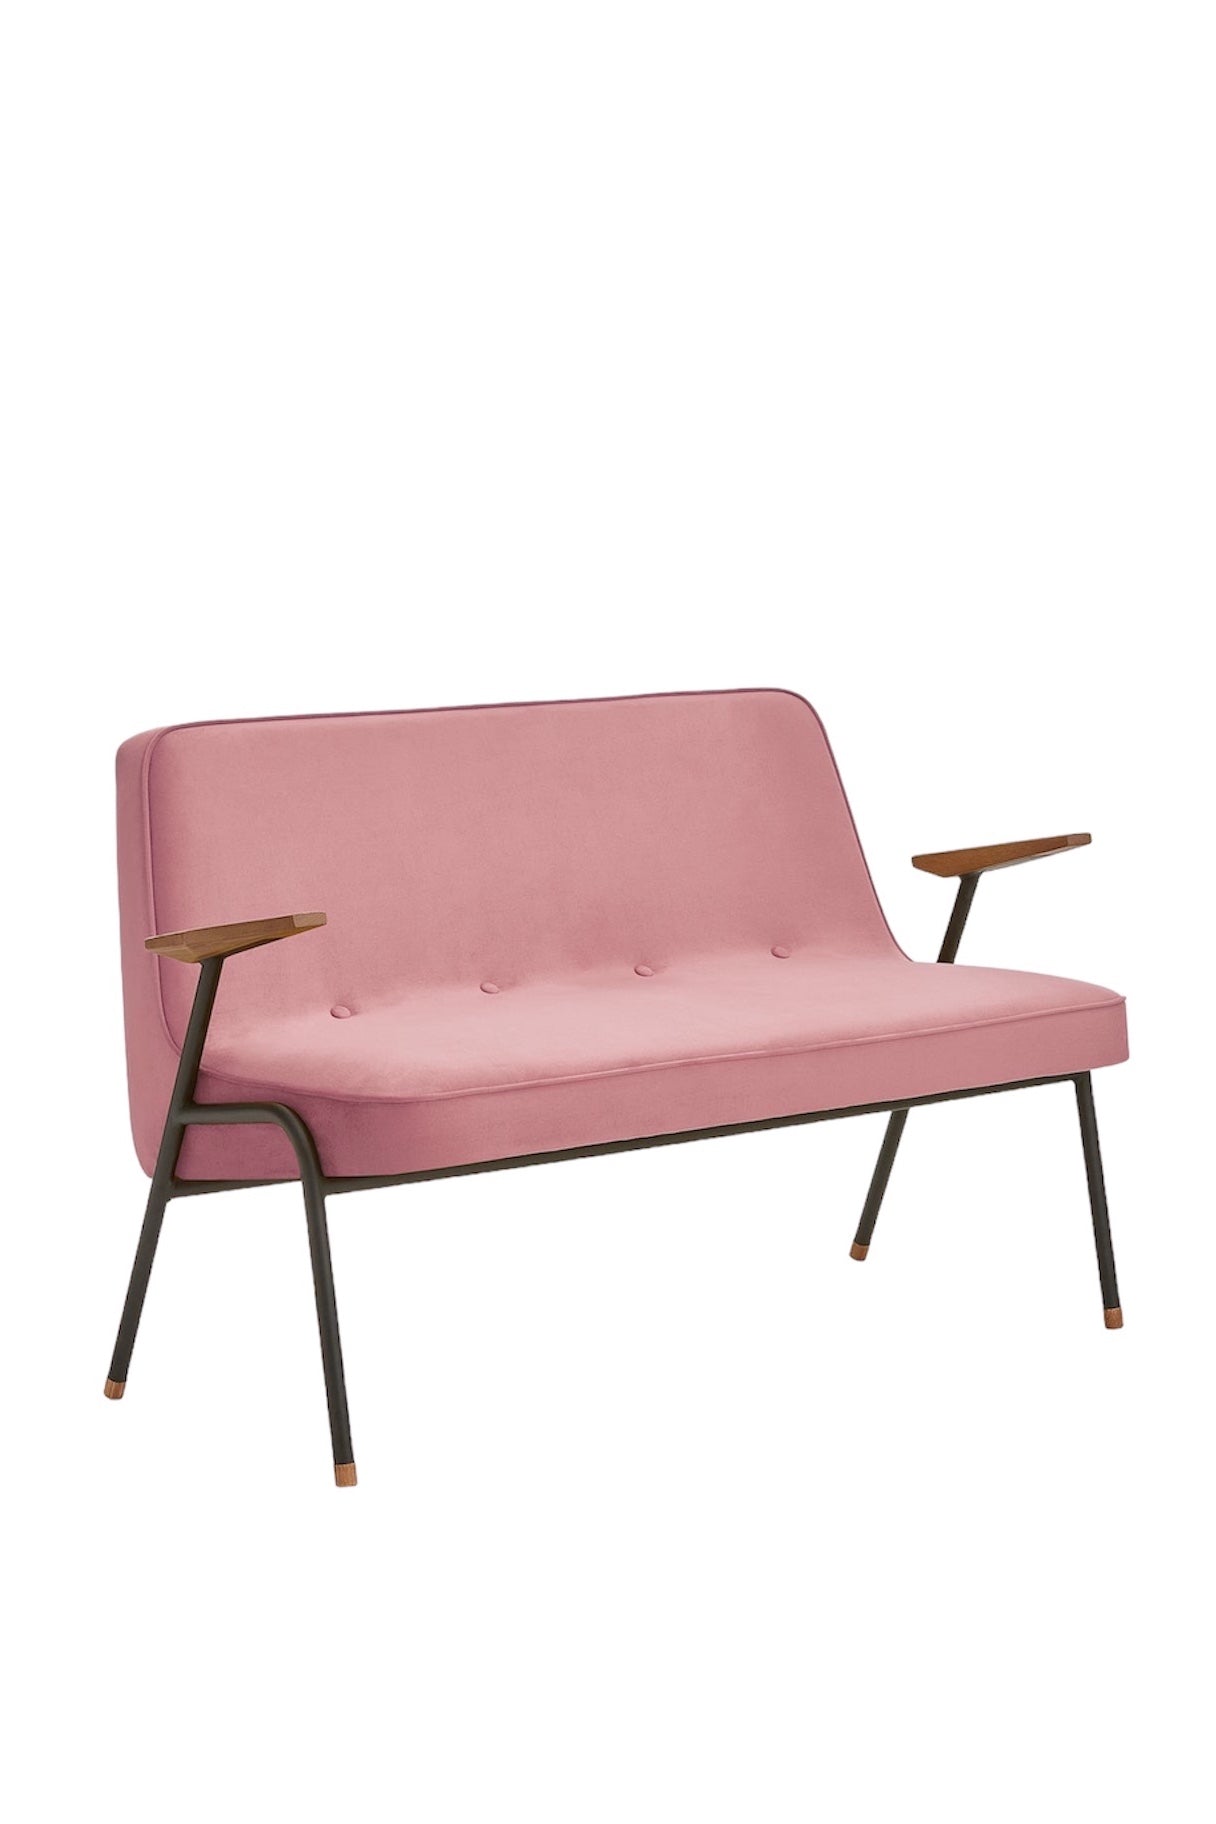 366 Metal Sofa-366 Concept-Contract Furniture Store